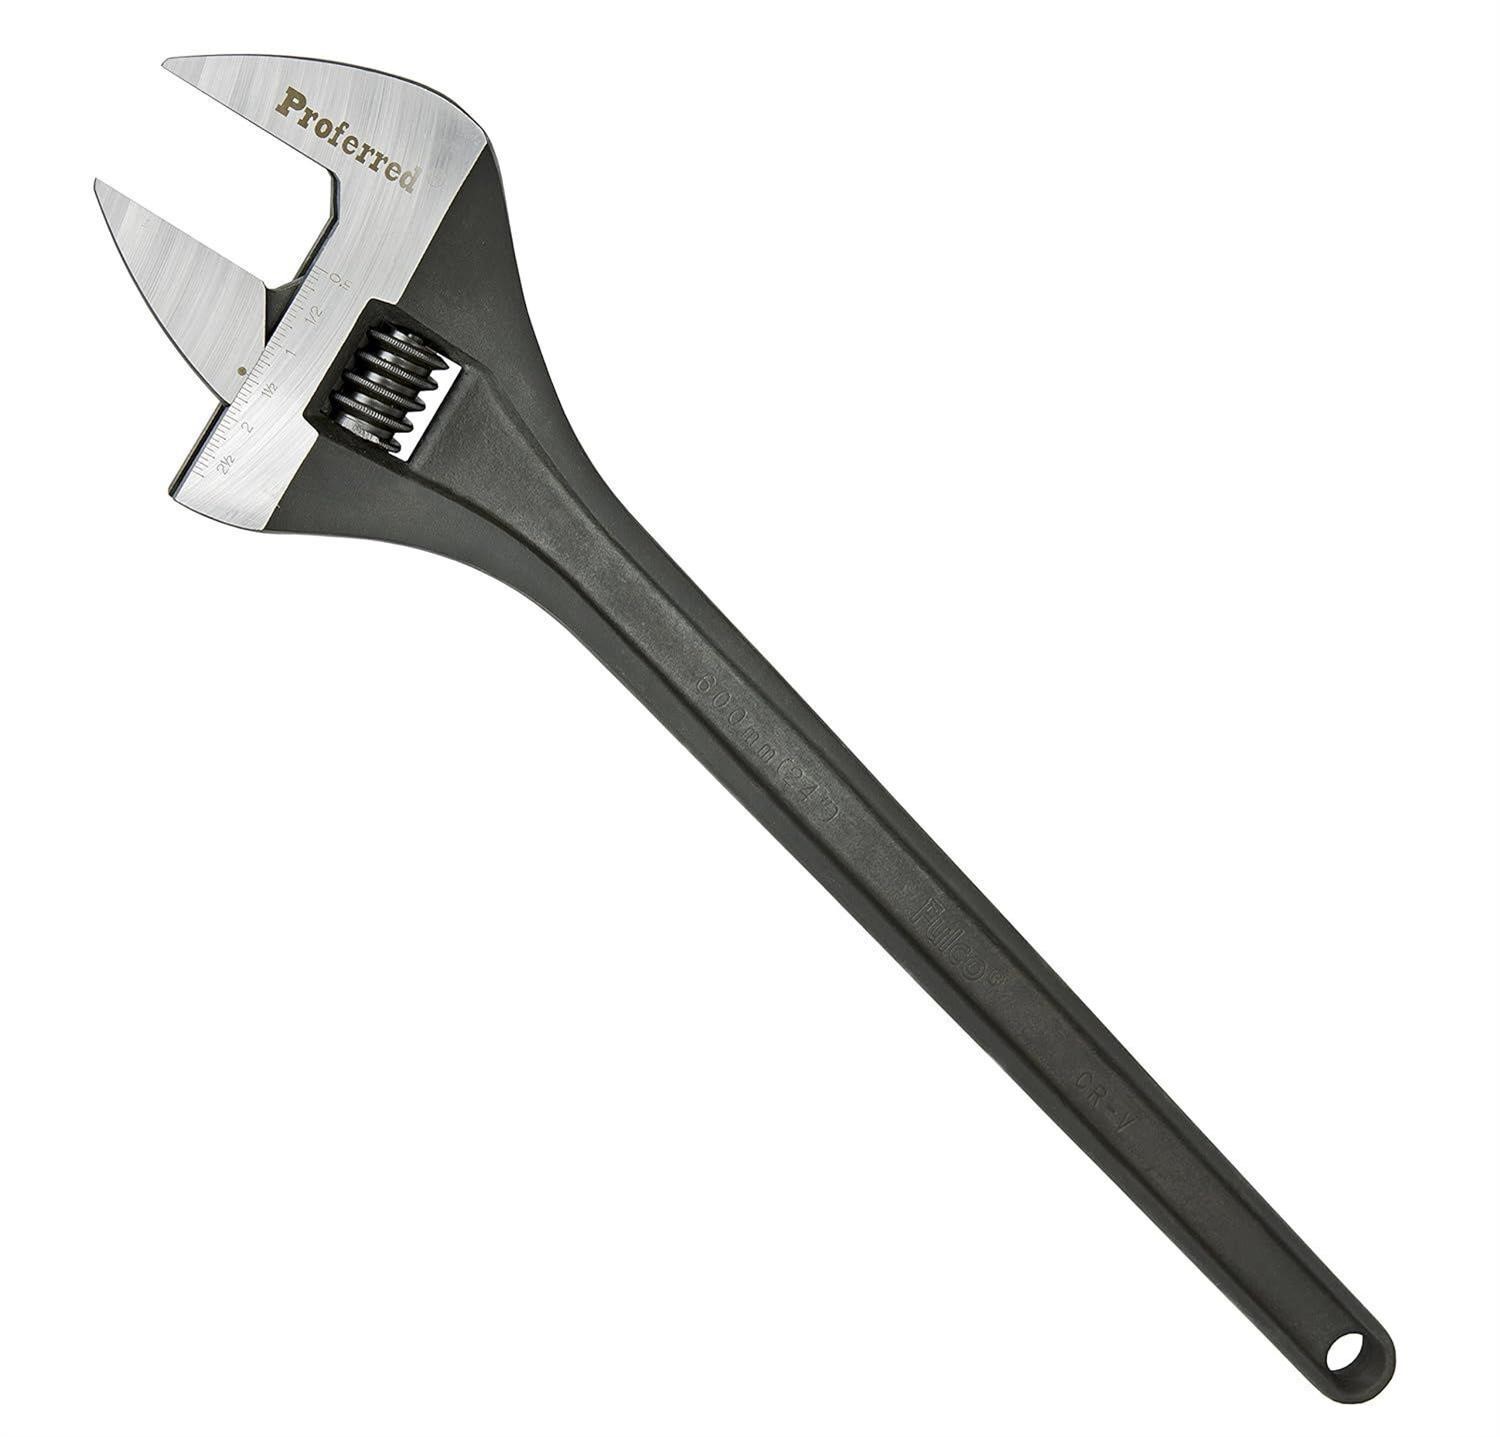 $121 - Proferred T05009 Standard Adjustable Wrench